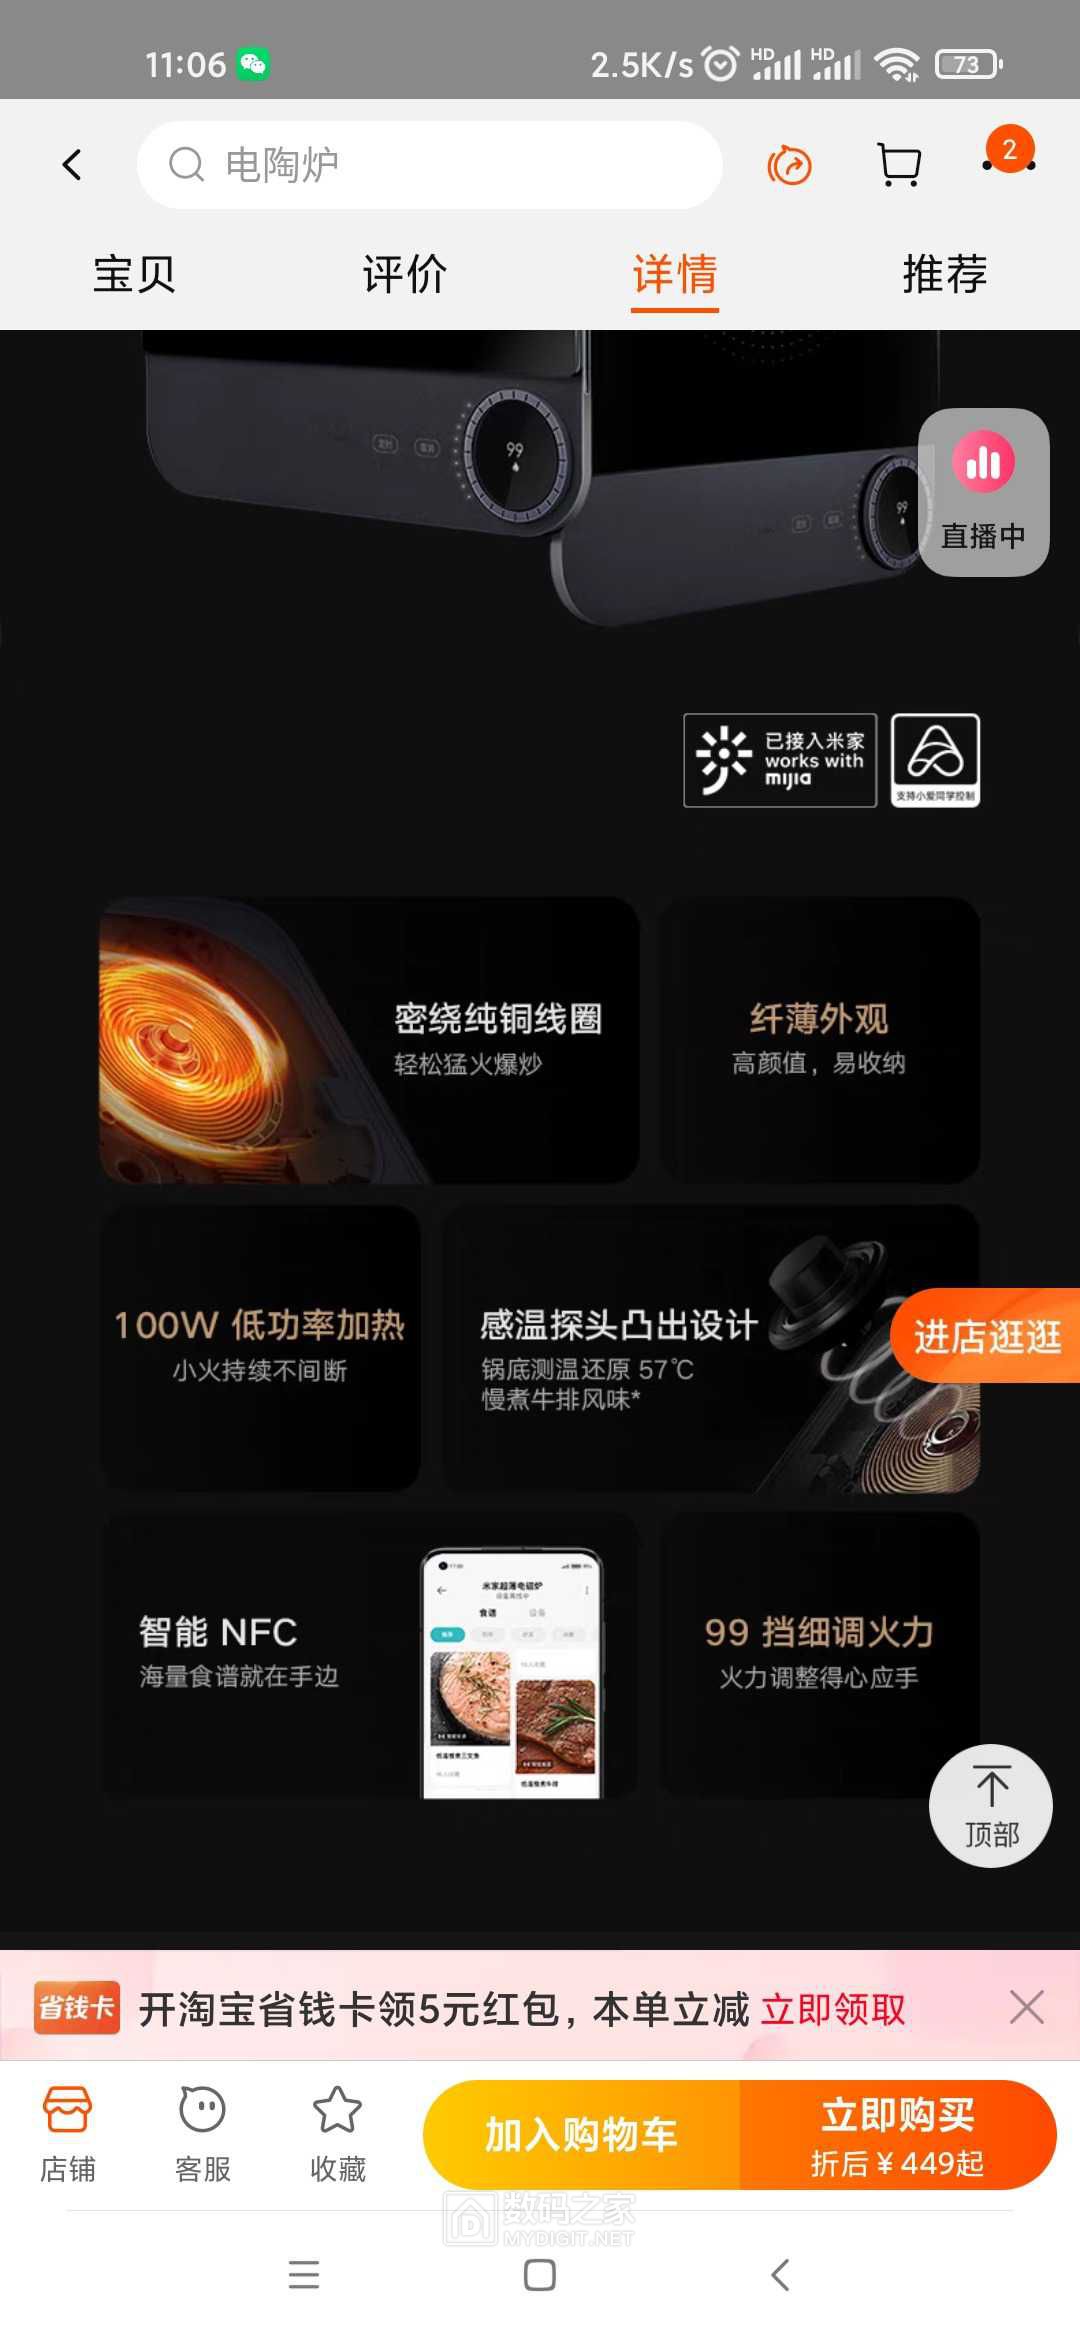 Screenshot_2021-11-14-11-06-03-569_com.taobao.taobao.jpg